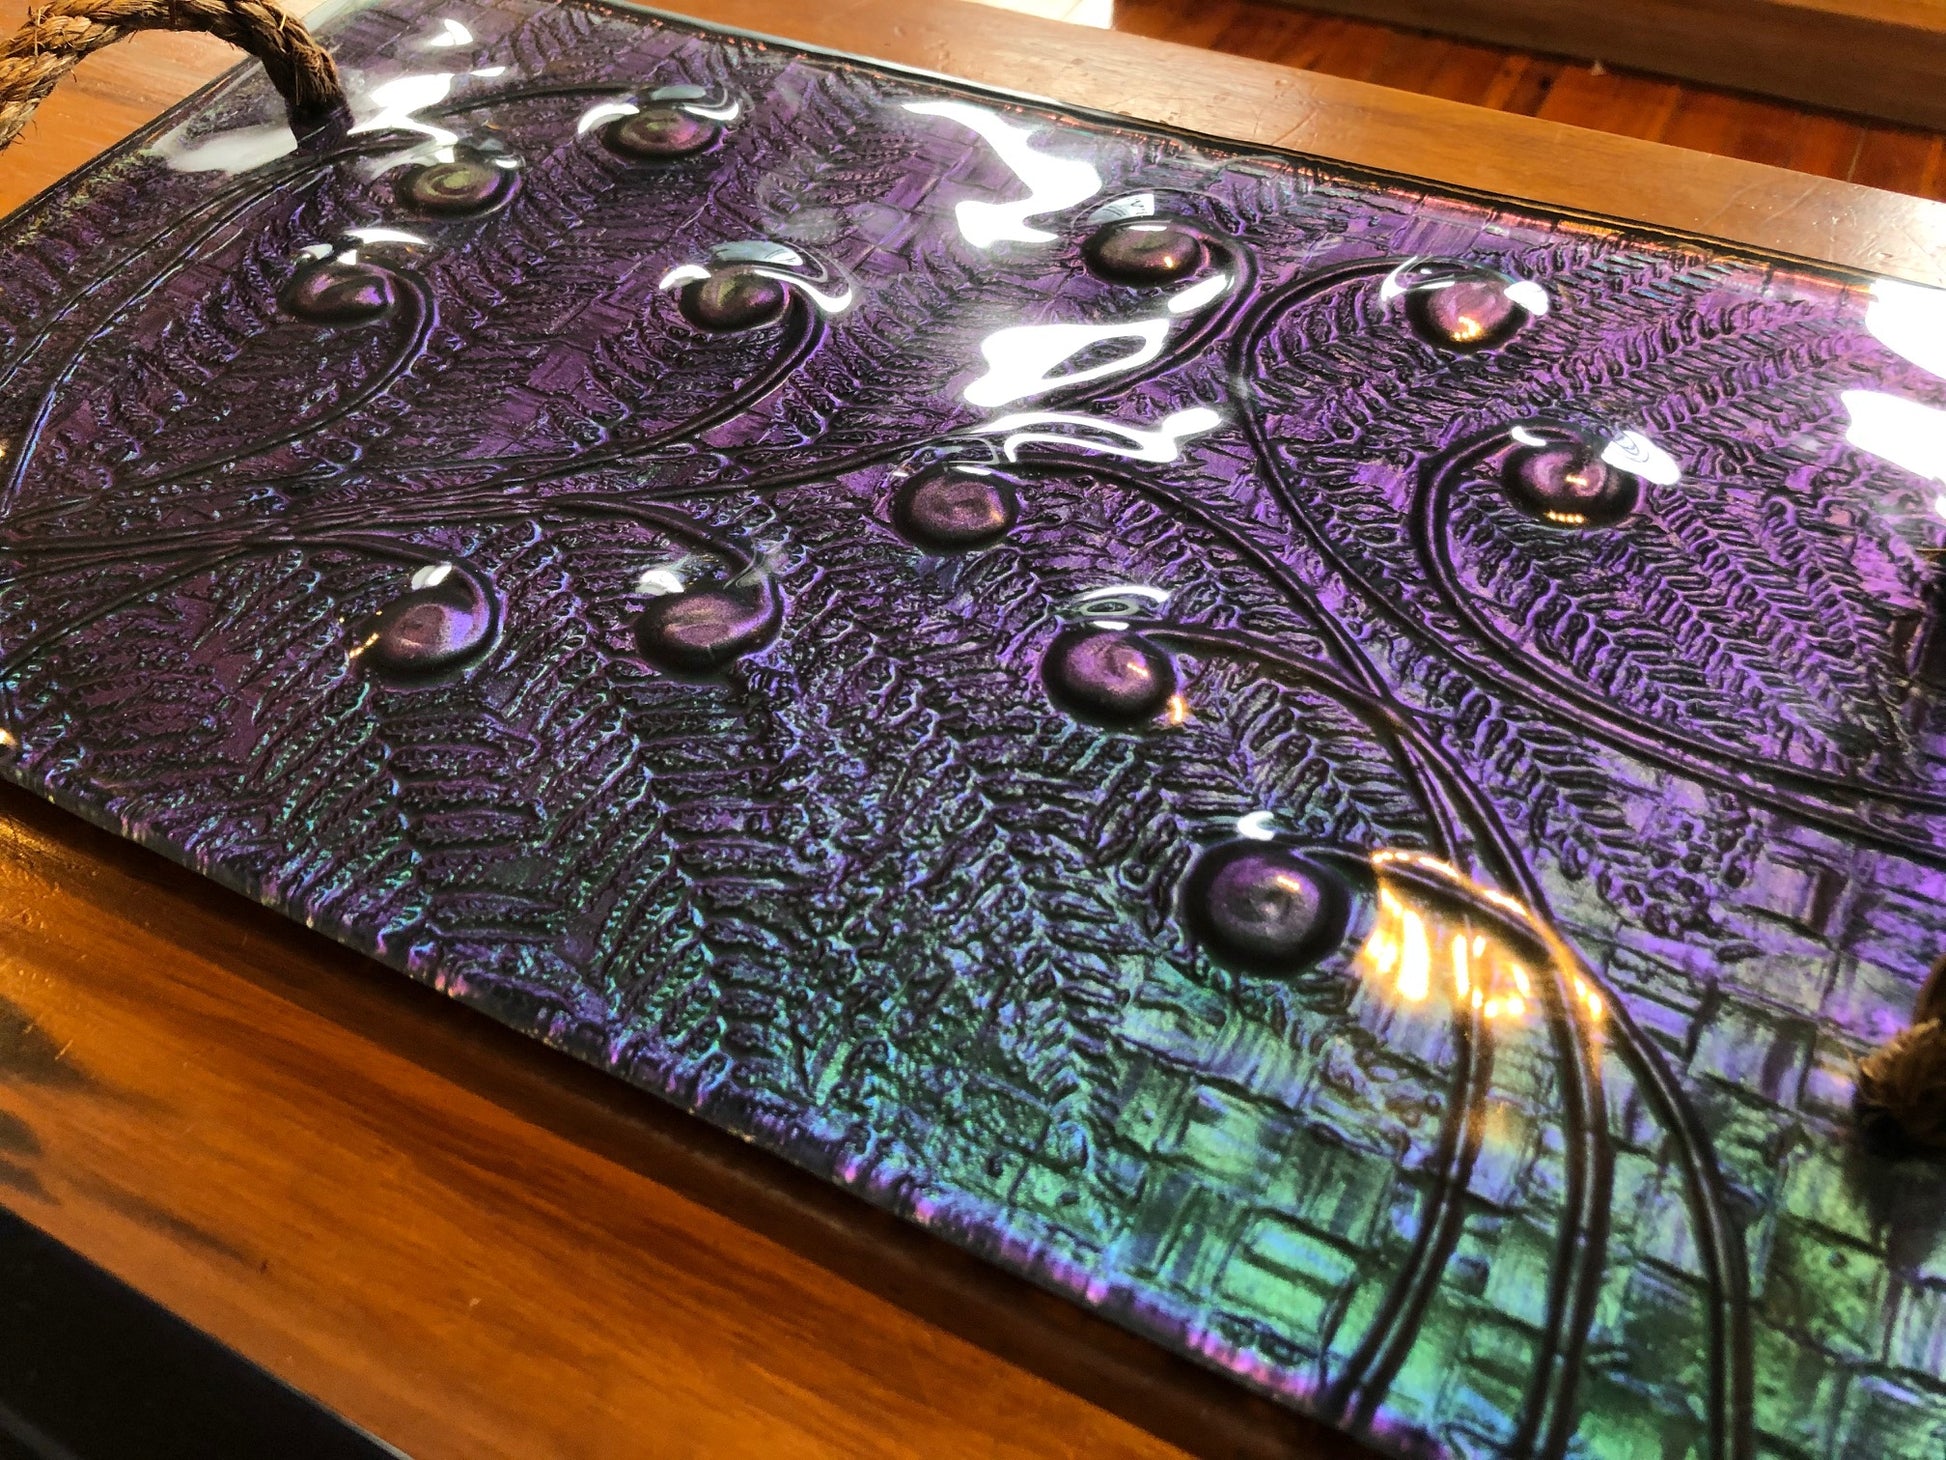 giftware homeware serveware grazing platter rope handle tray glass handmade in New Zealand Koru Fern Kaleidoscope kiwiana